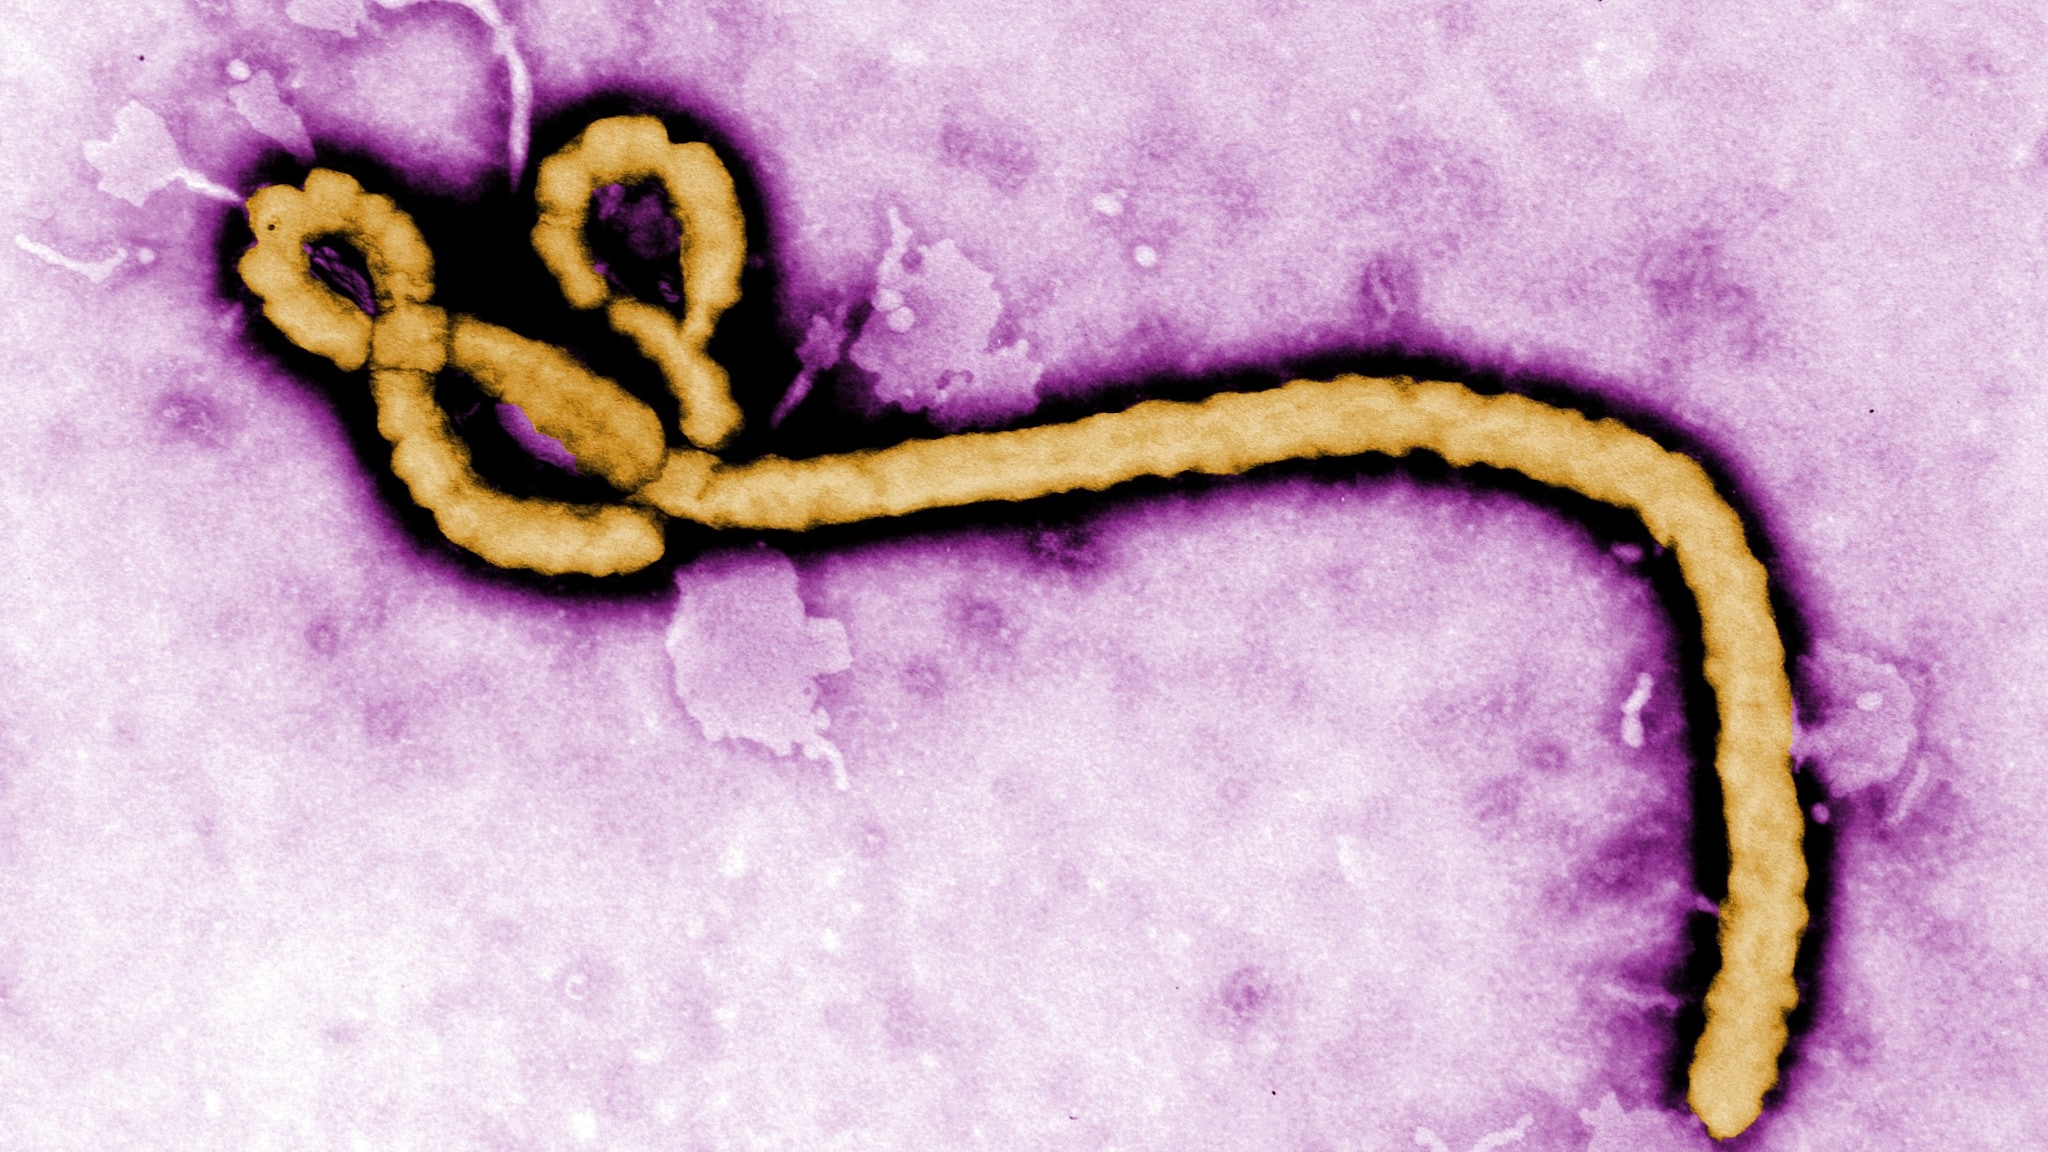 Microscopic image of the Ebola virus